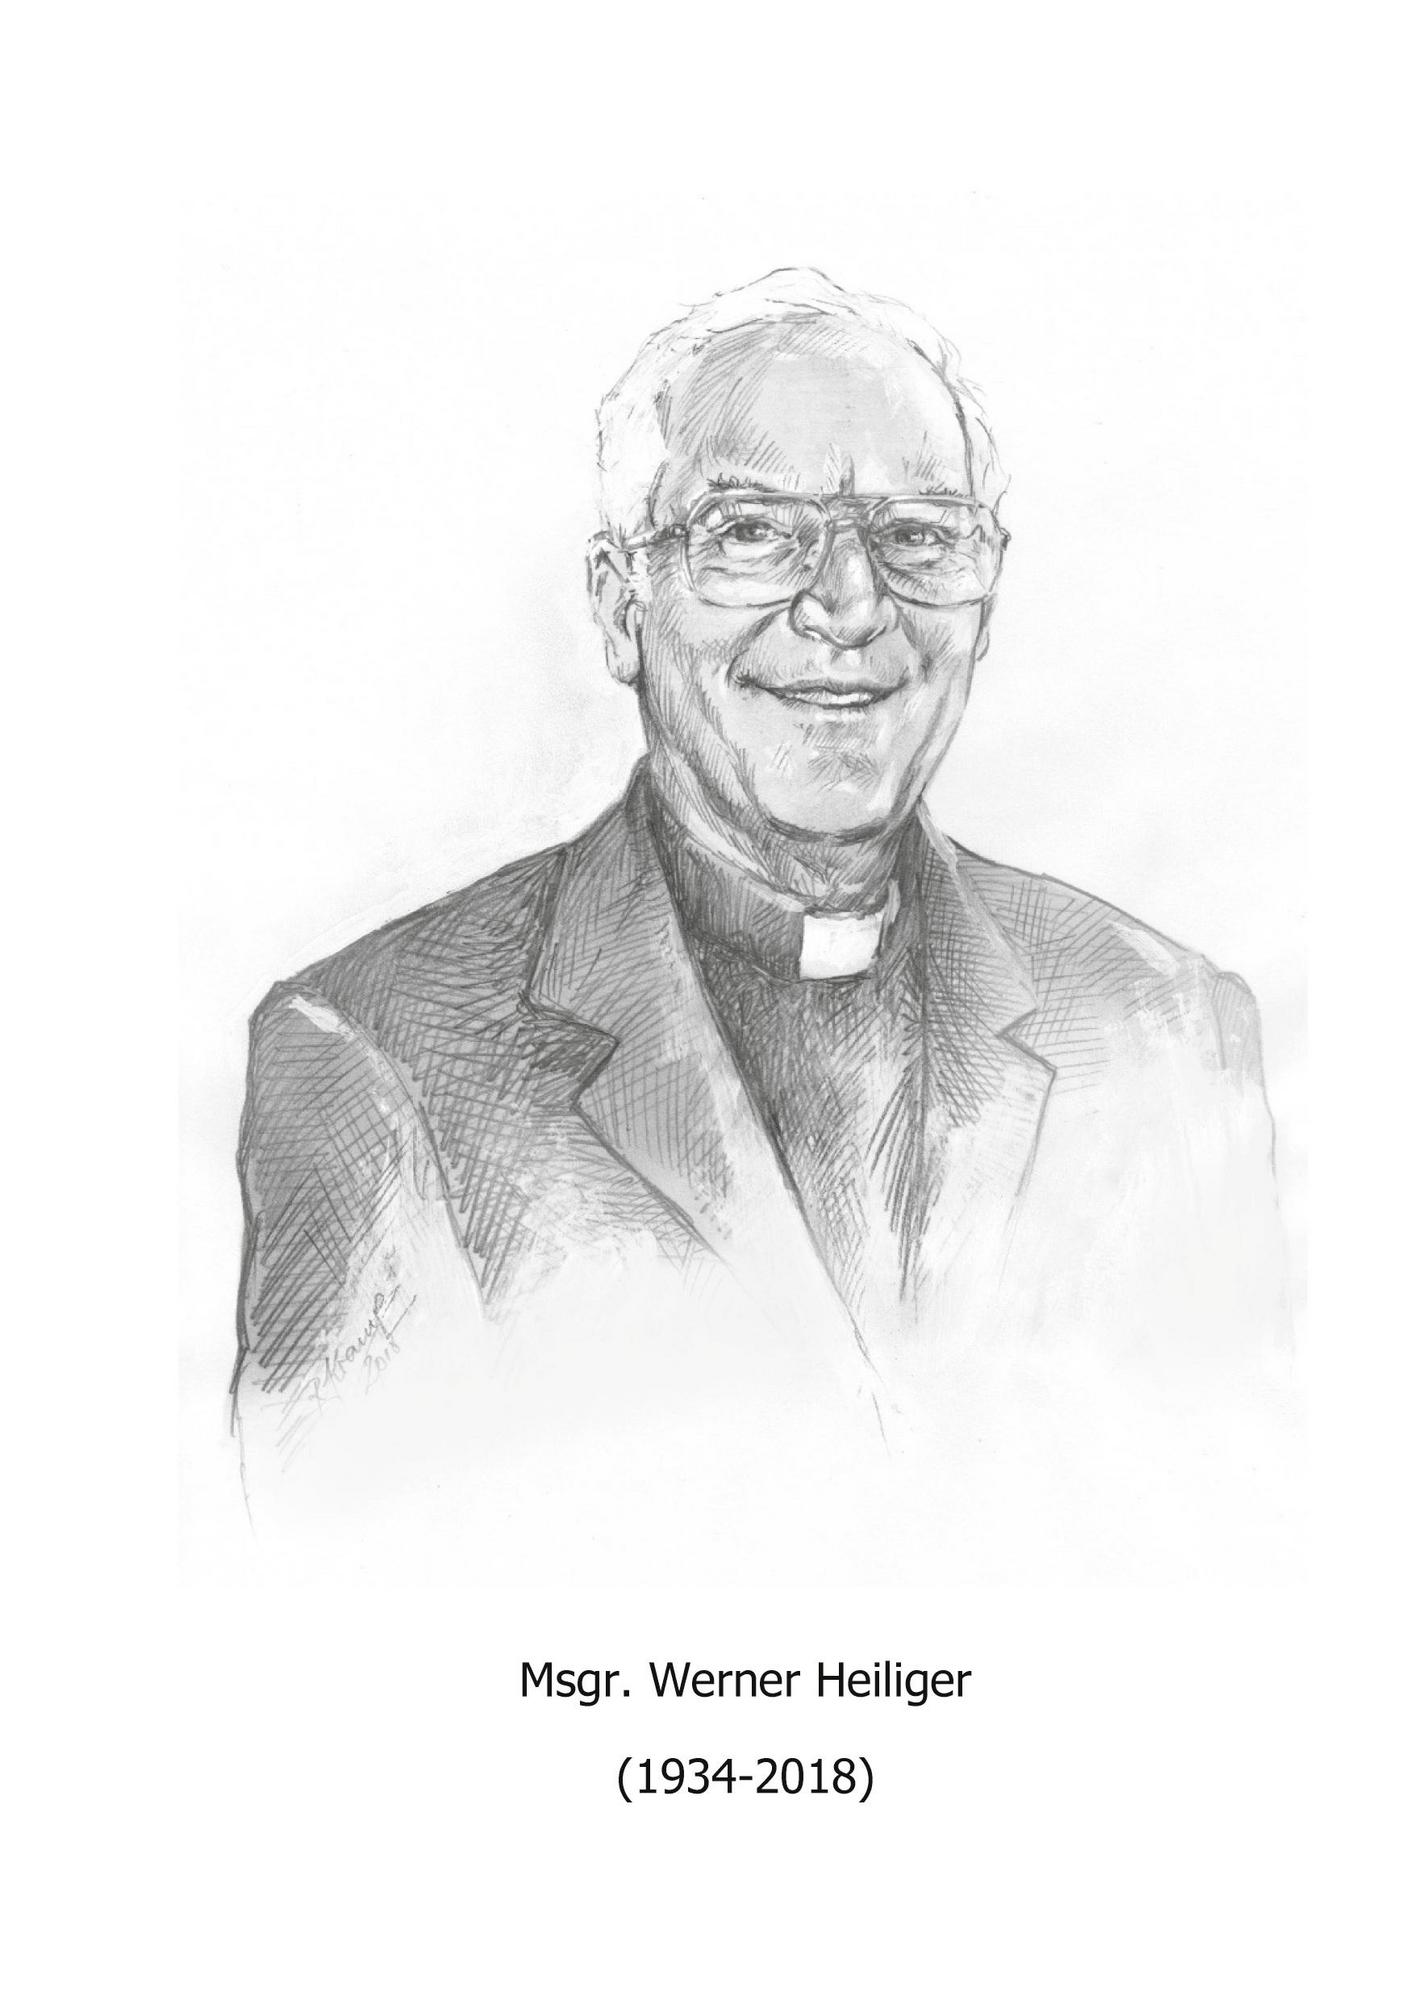 Frontpage of the book [Wayback] Msgr. Werner Heiliger (1934-2018) von Horst A. Wessel - Buch | Thalia.